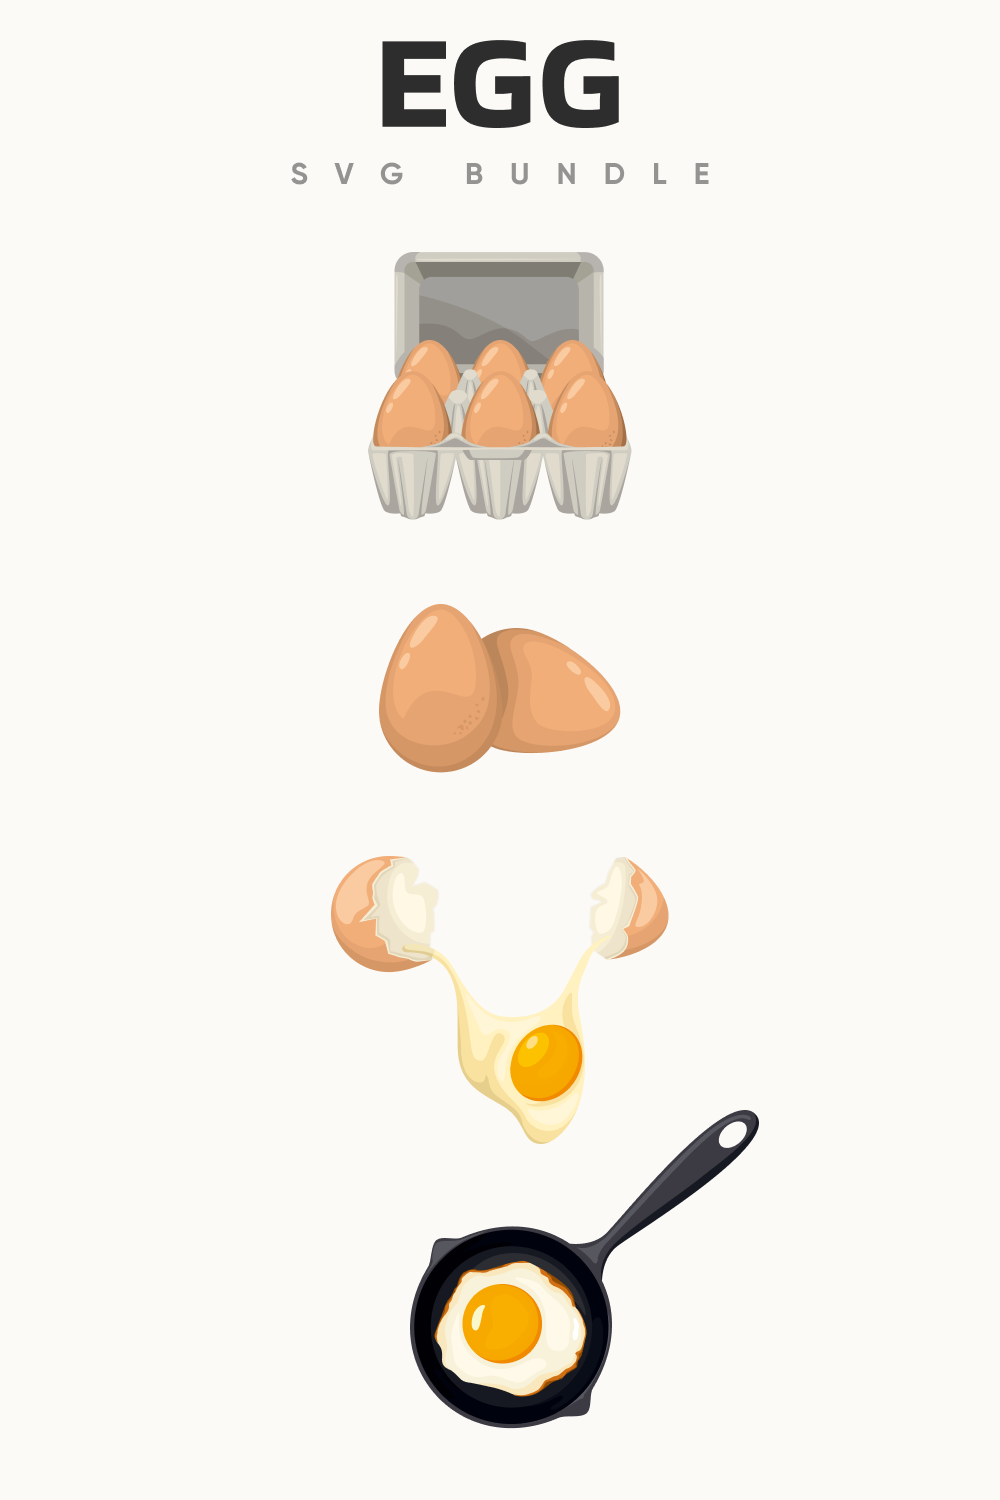 All elements for the egg illustration.